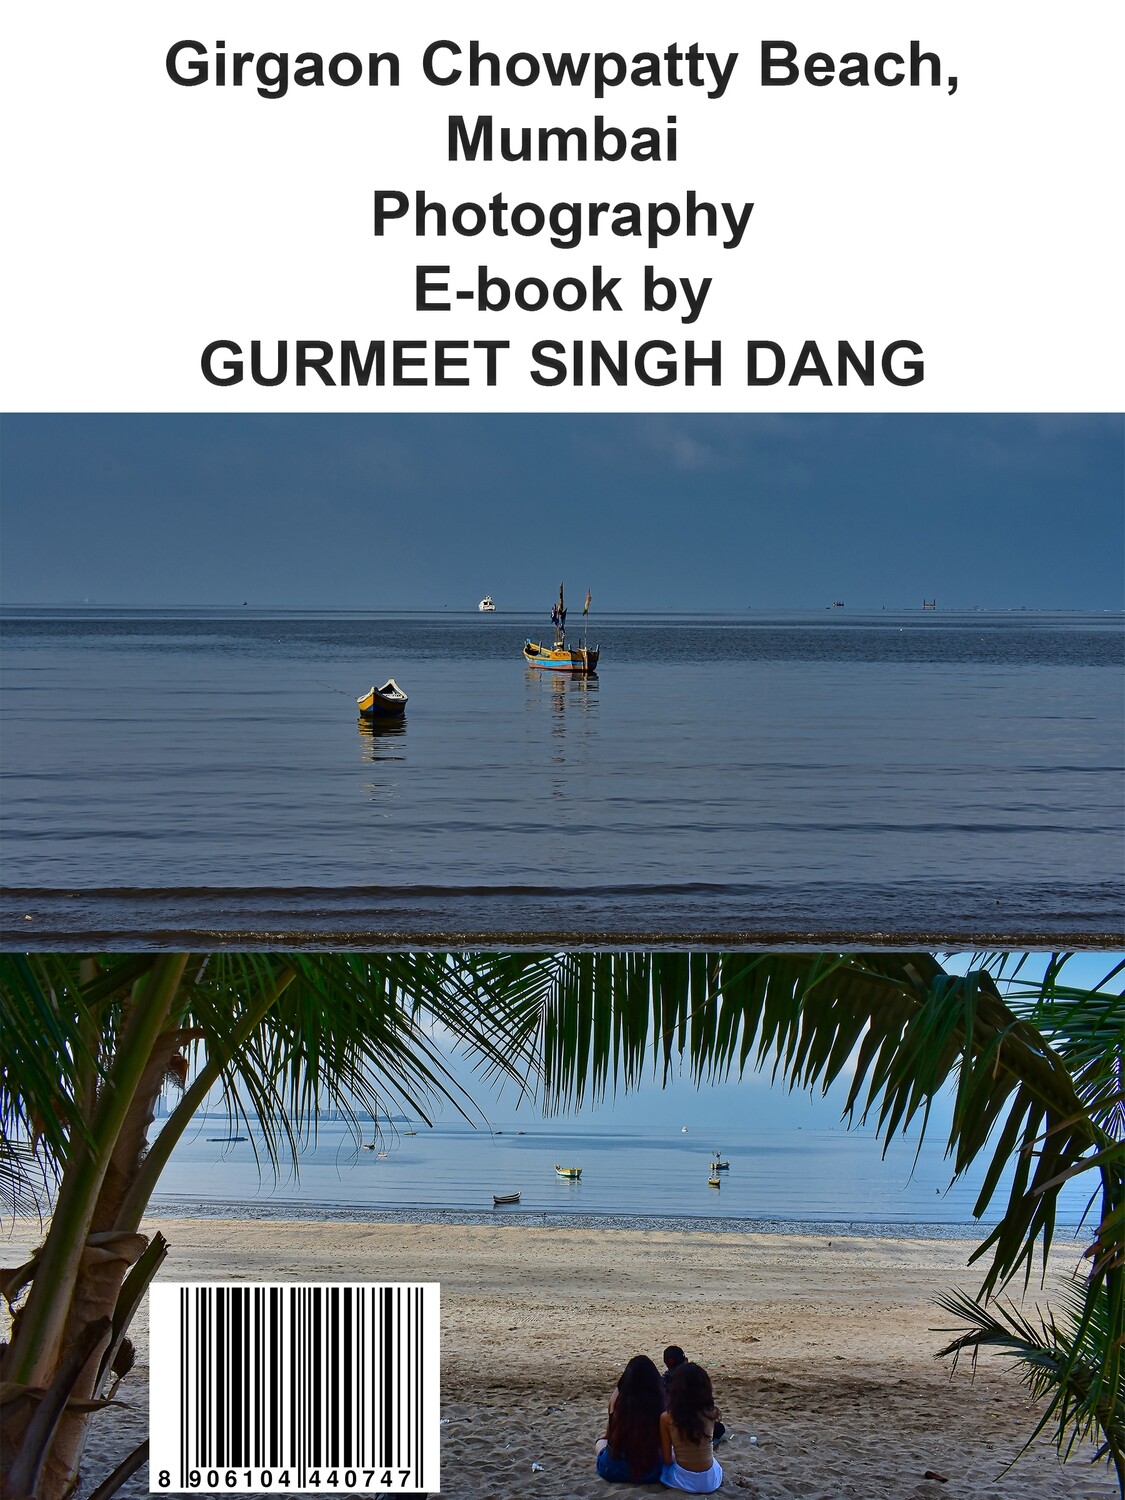 Girgaon Chowpatty Beach, Mumbai Photography E-book by GURMEET SINGH DANG